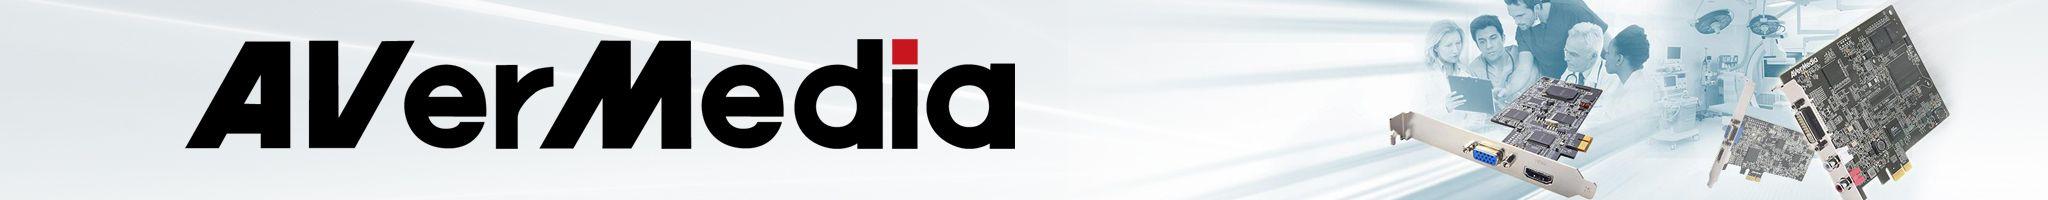 AVerMedia Logo - Welcome to Braemac.co.uk - AverMedia M.2 Frame Grabbers